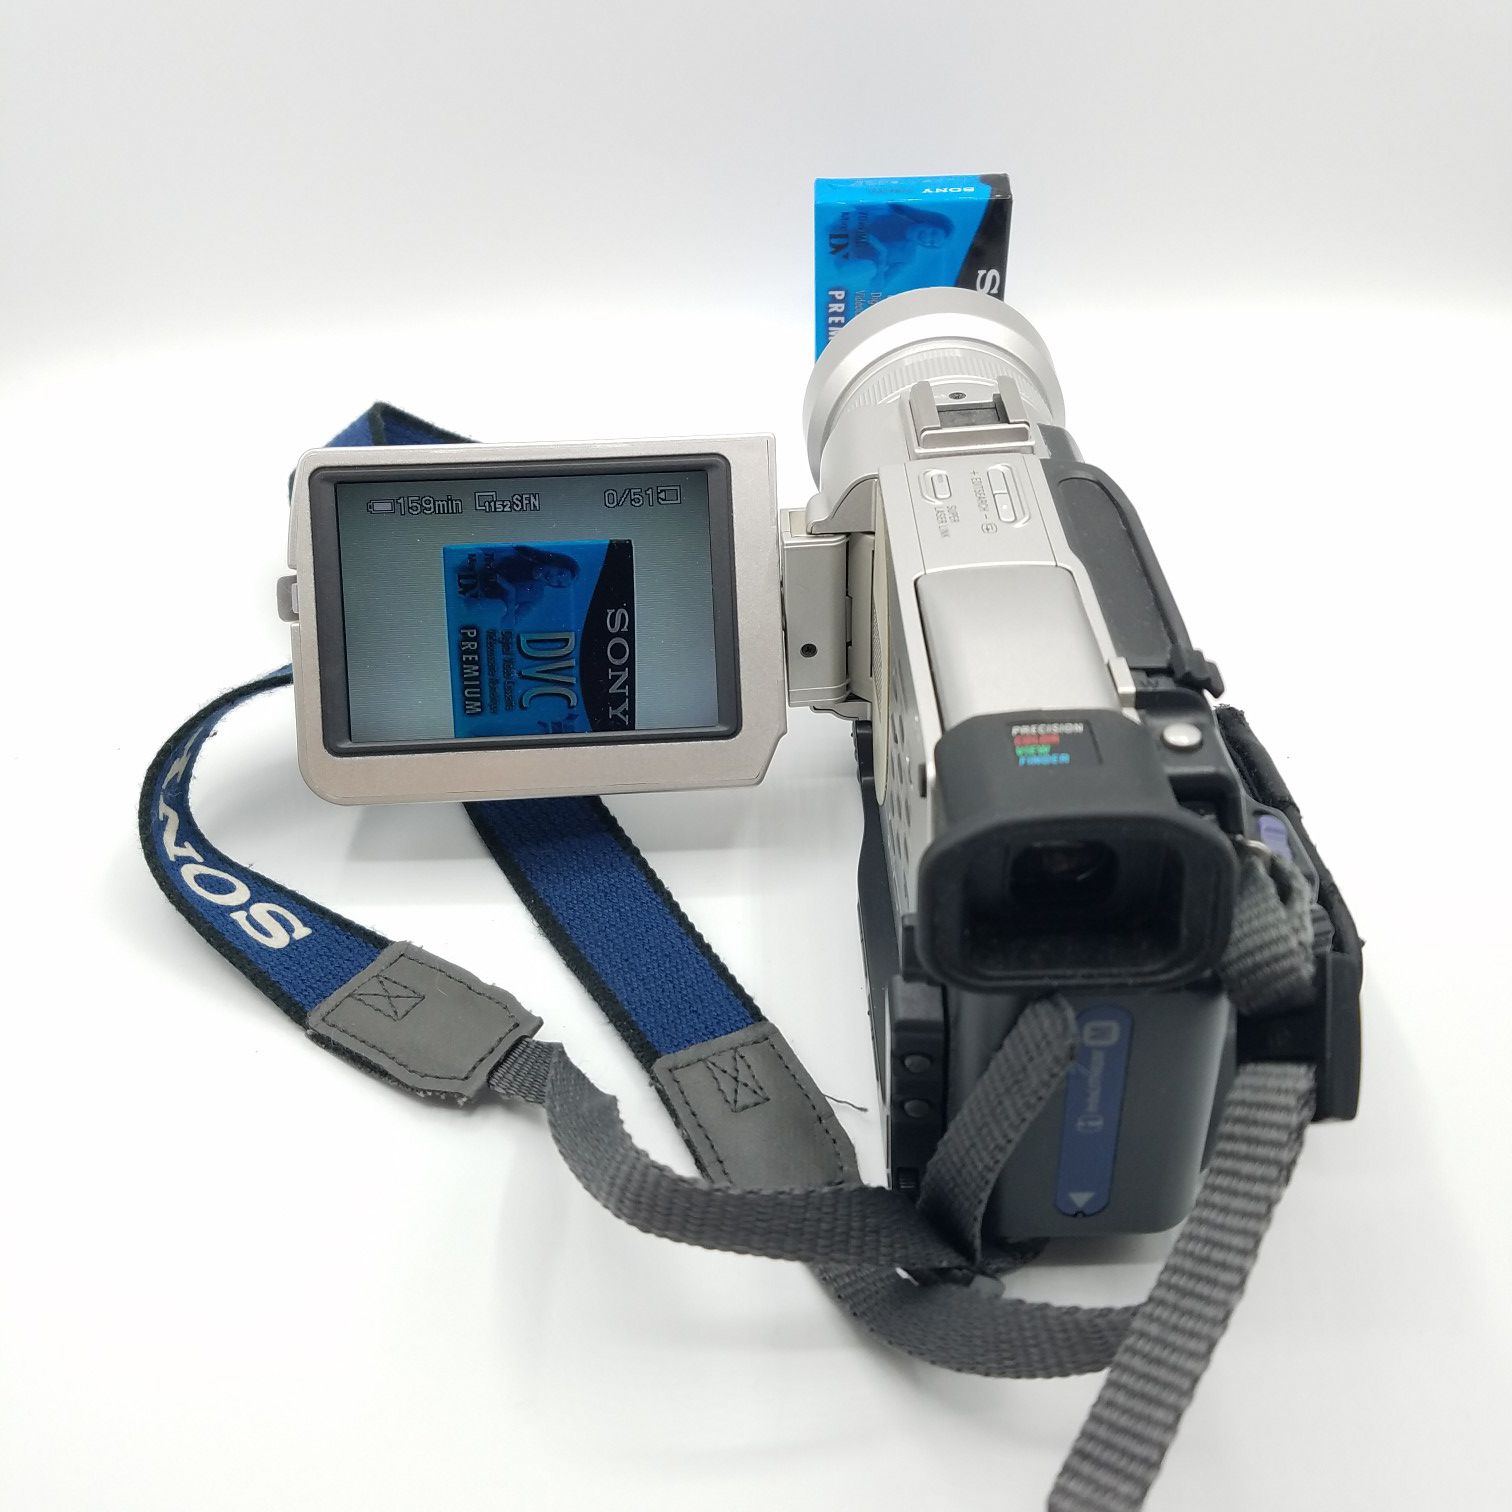 Sony DCR-TRV20 Digital Video Camera Recorder MiniDV Tested